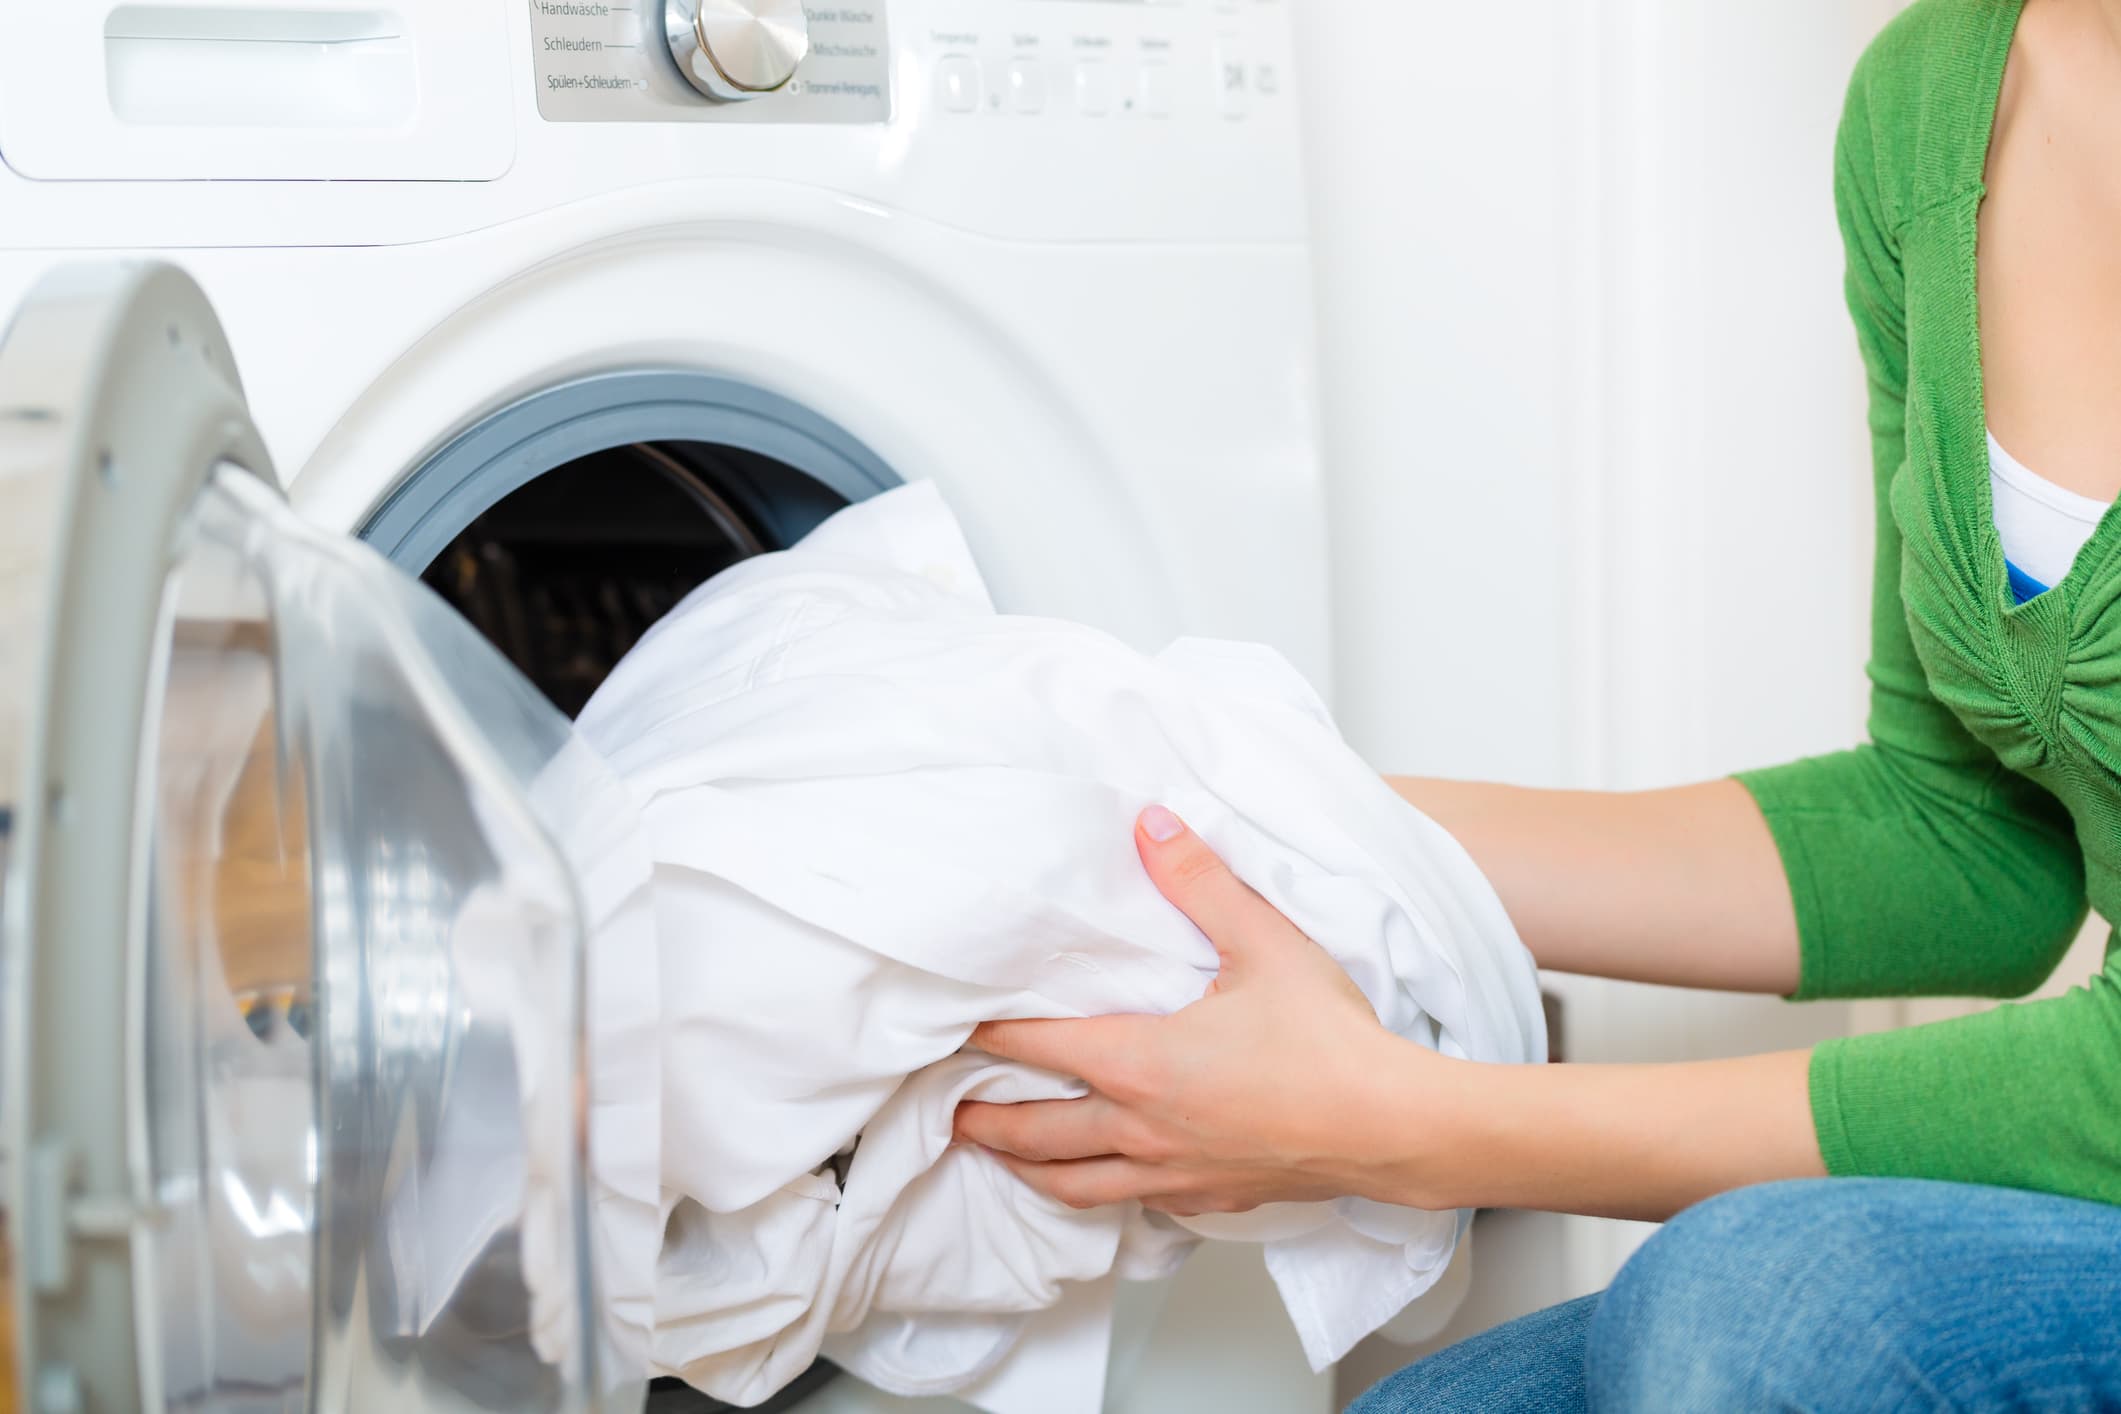 Person putting laundry into washing machine